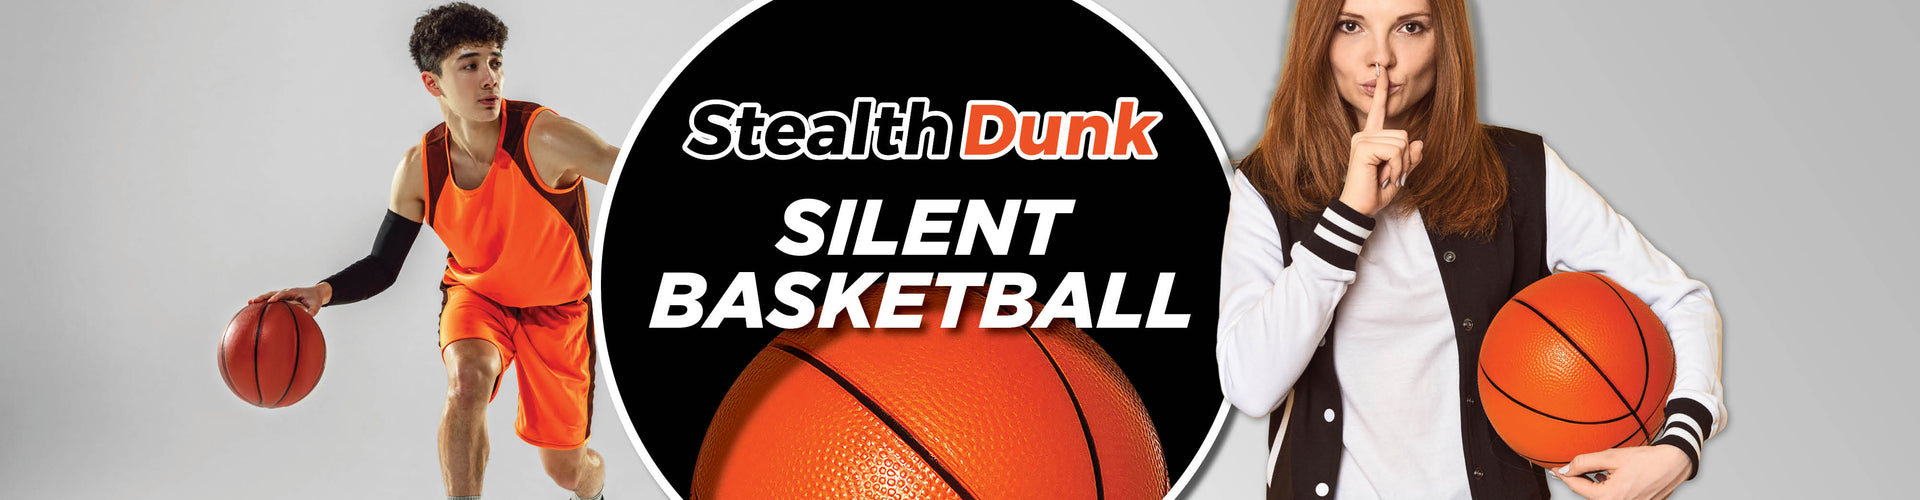 Stealth Dunk Silent Basketball